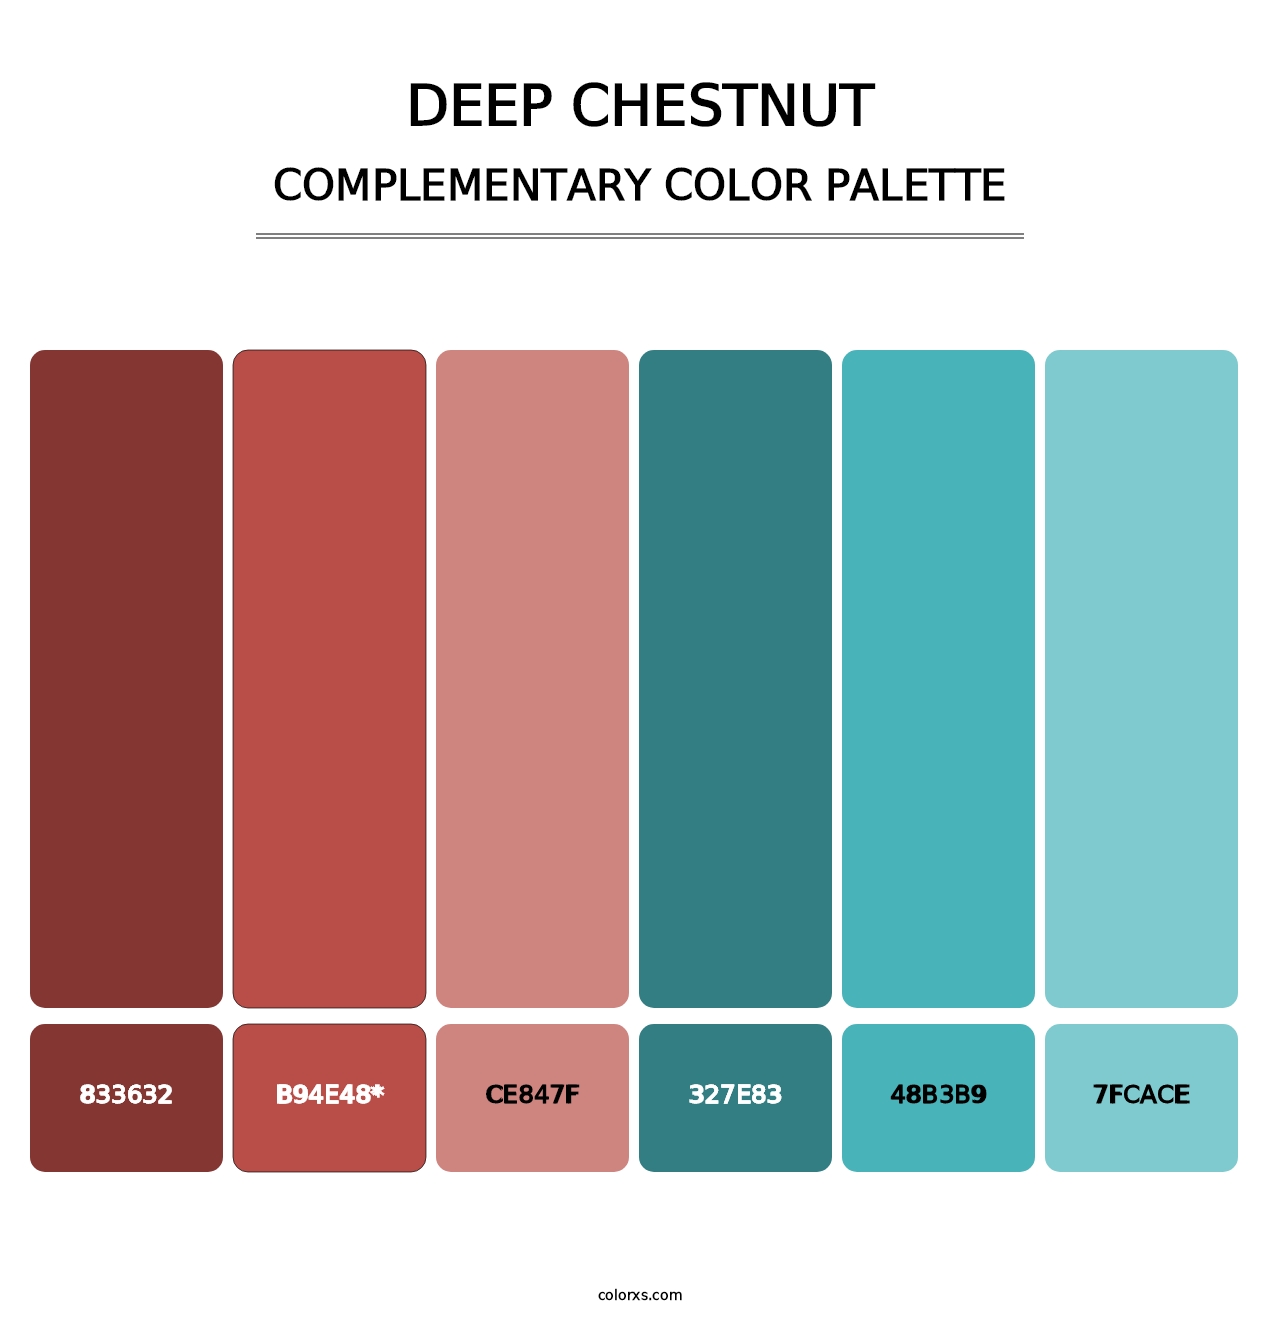 Deep Chestnut - Complementary Color Palette